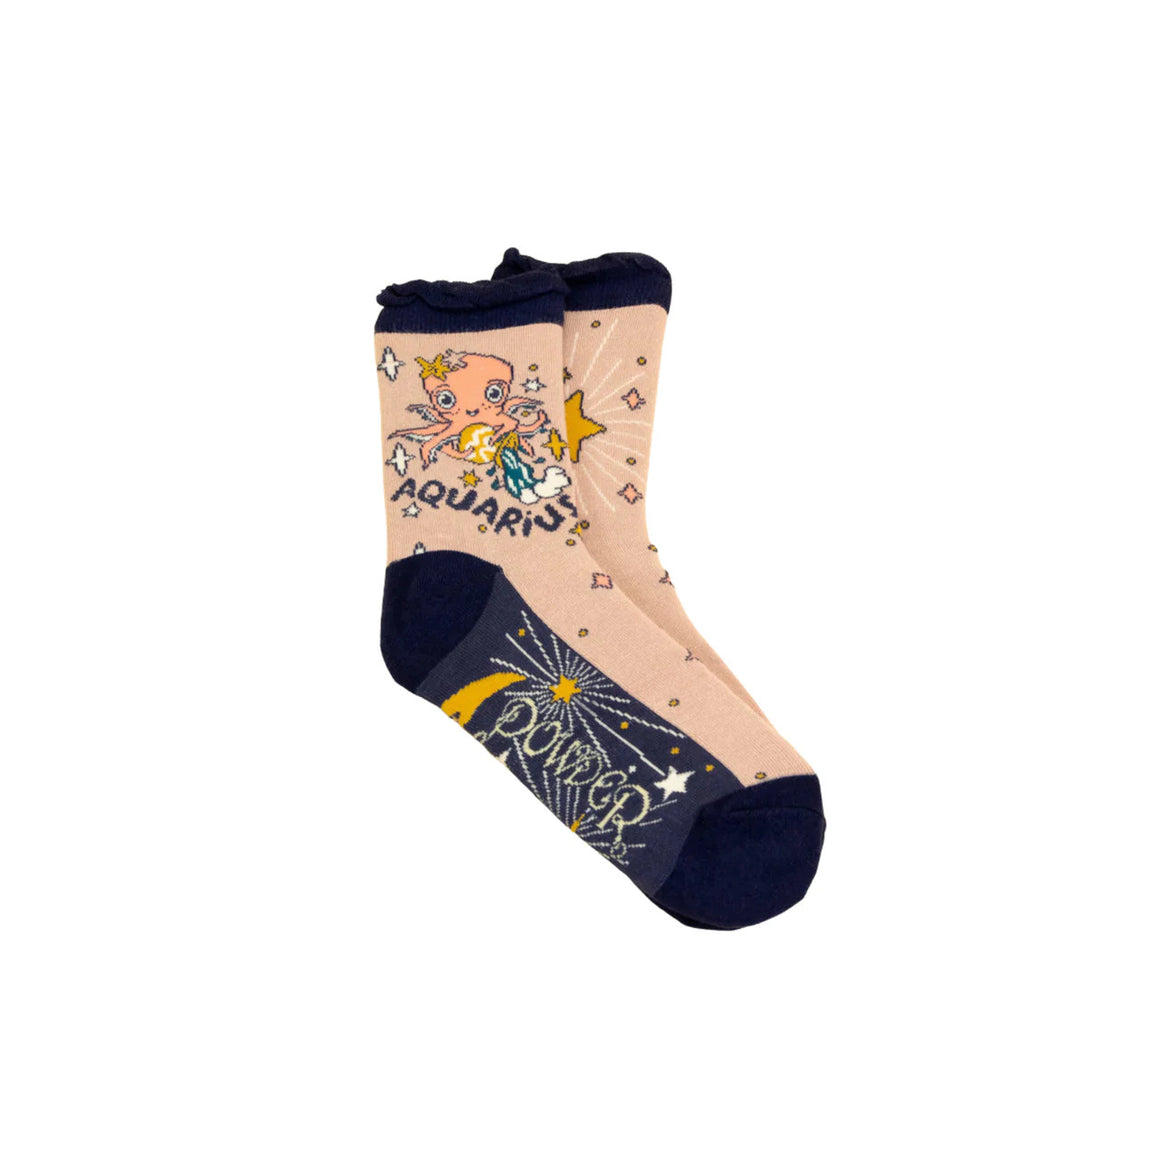 Aquarius Zodiac Socks from Powder Designs